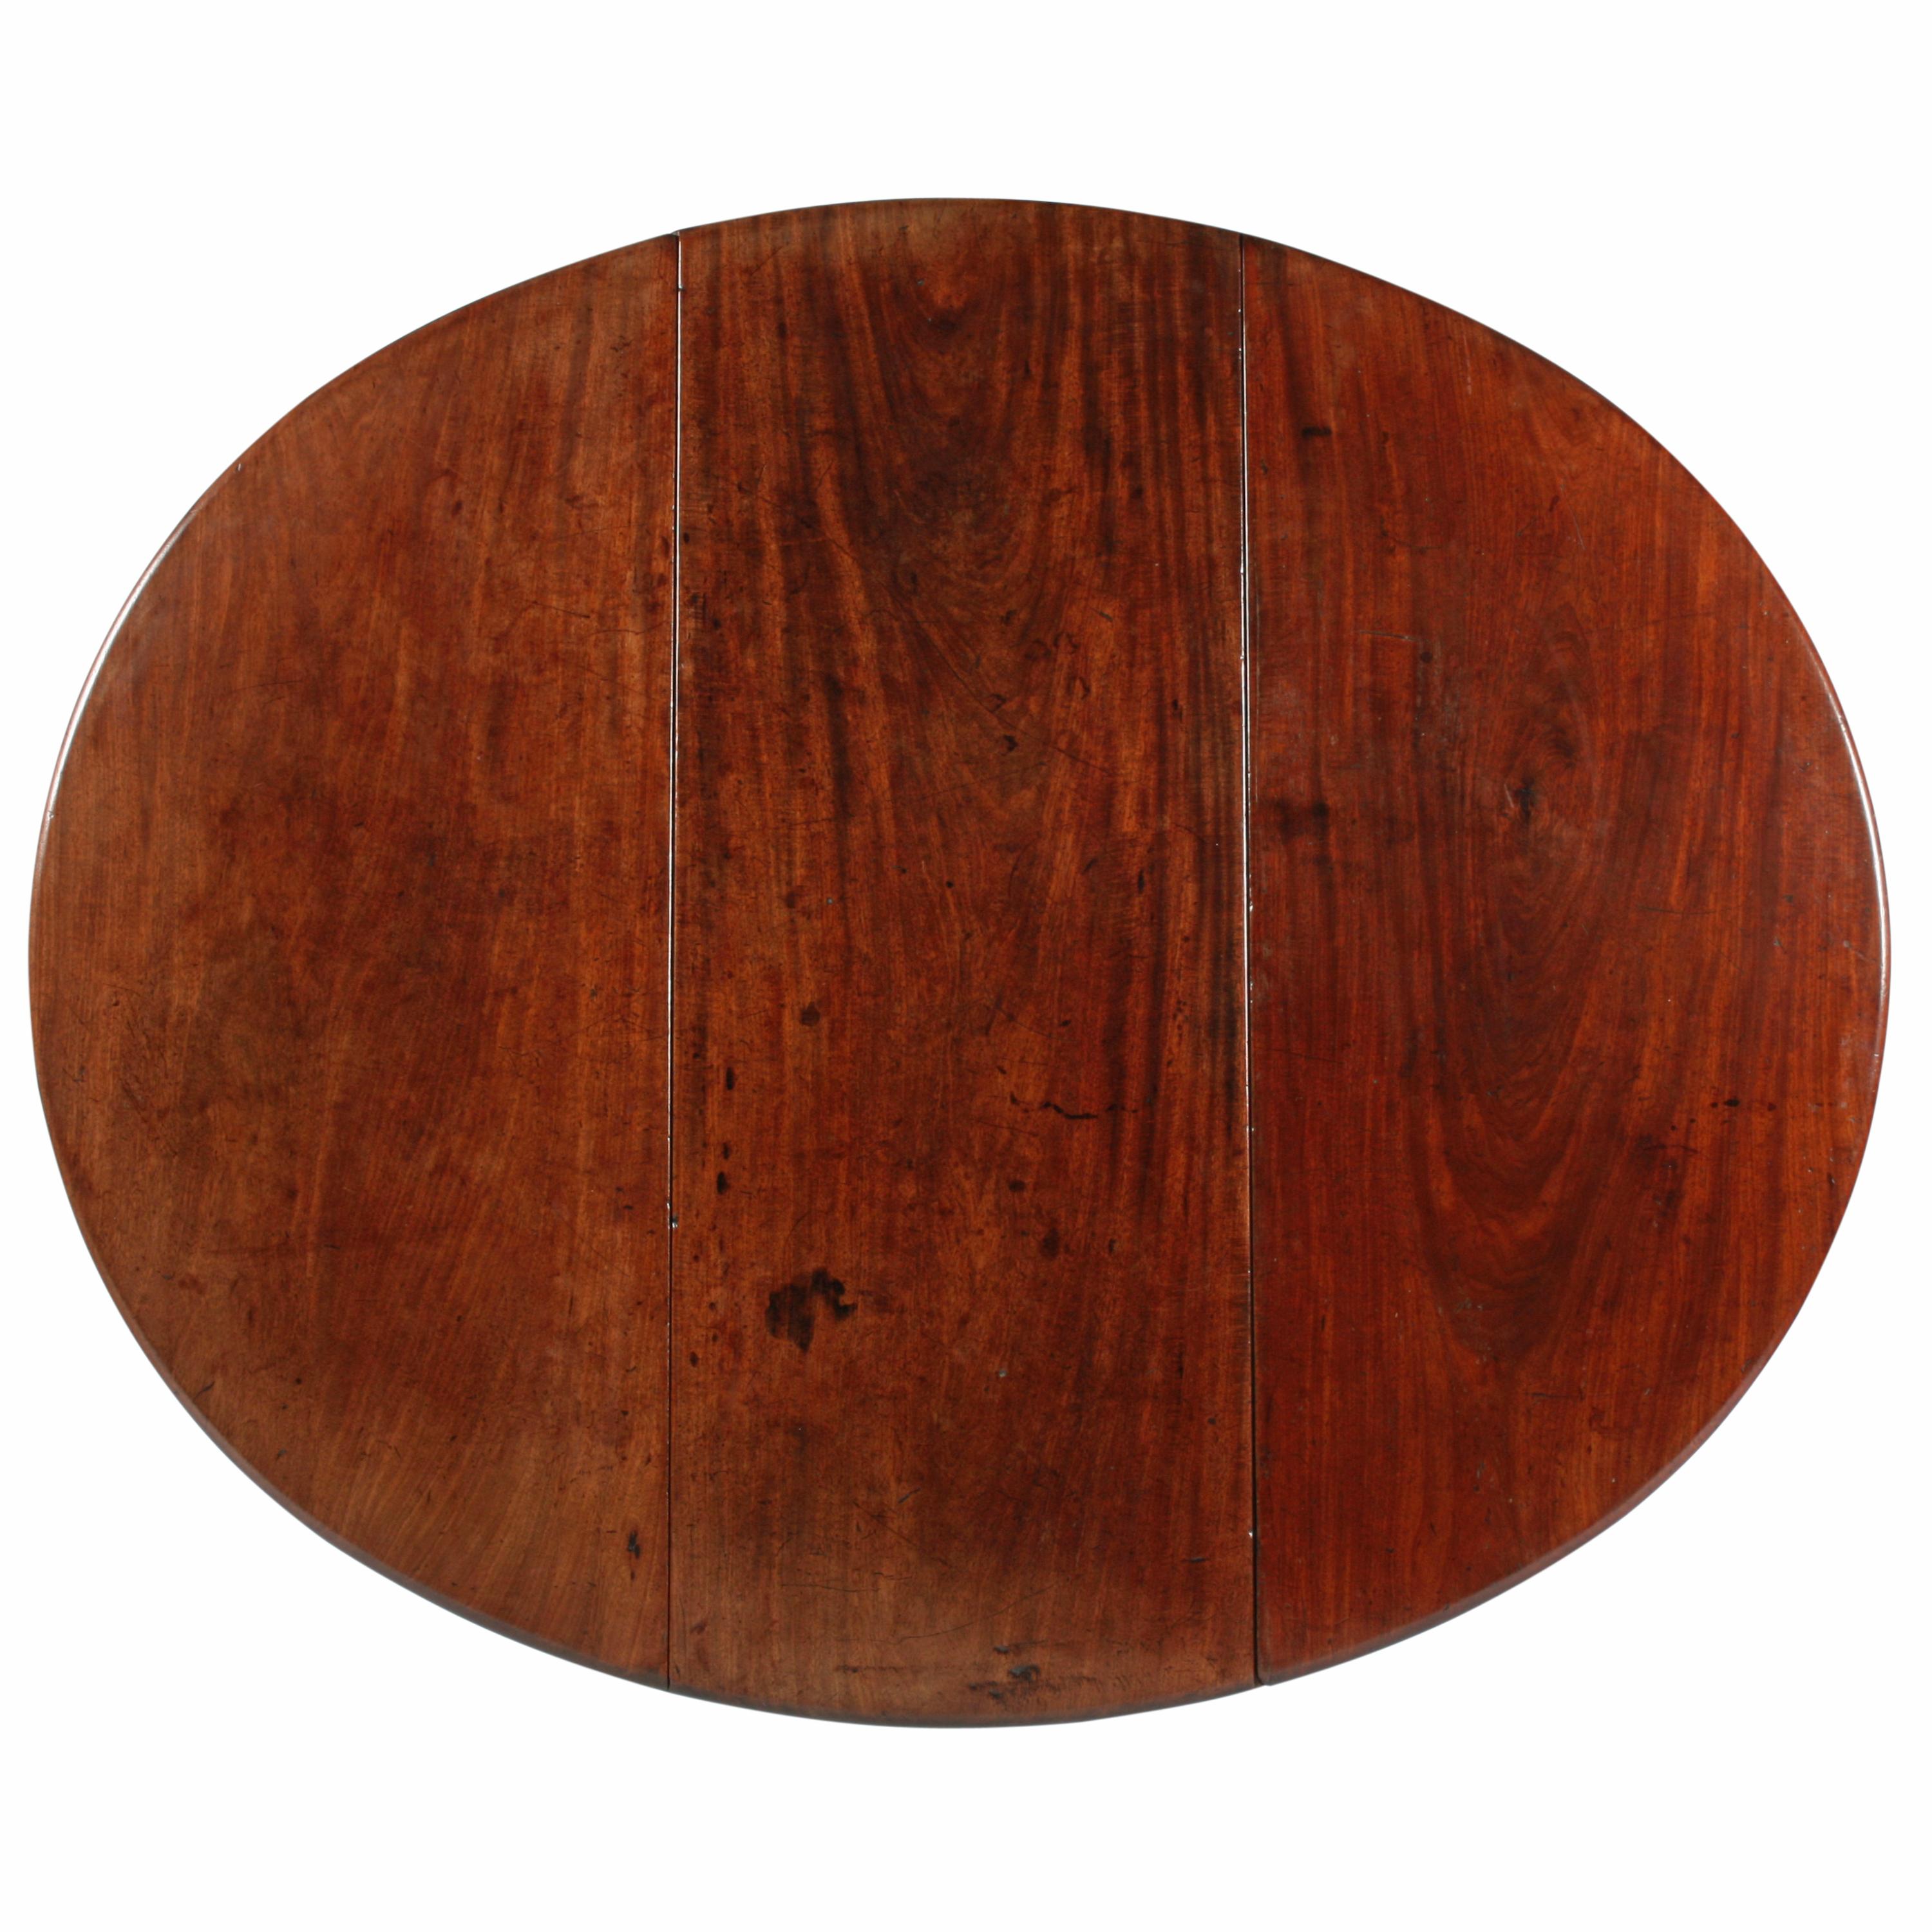 Mahogany 18th Century Pad Foot Drop-Leaf Table